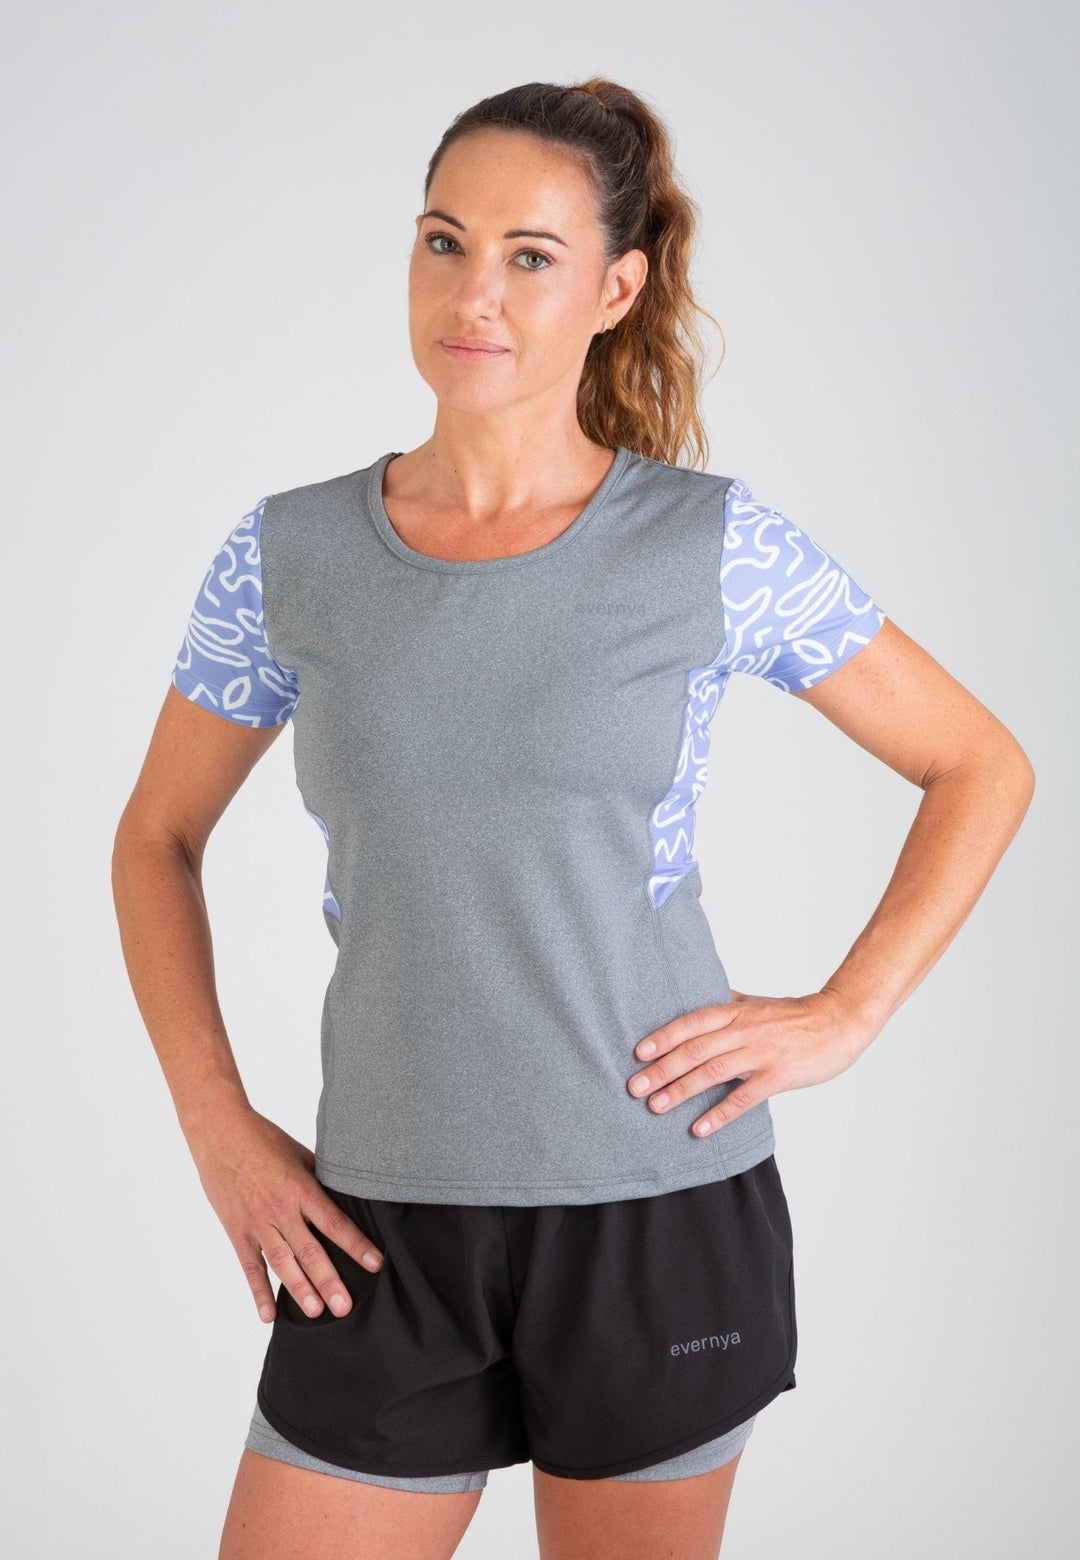 Camiseta Trail Running Slim Fit Mujer - evernya